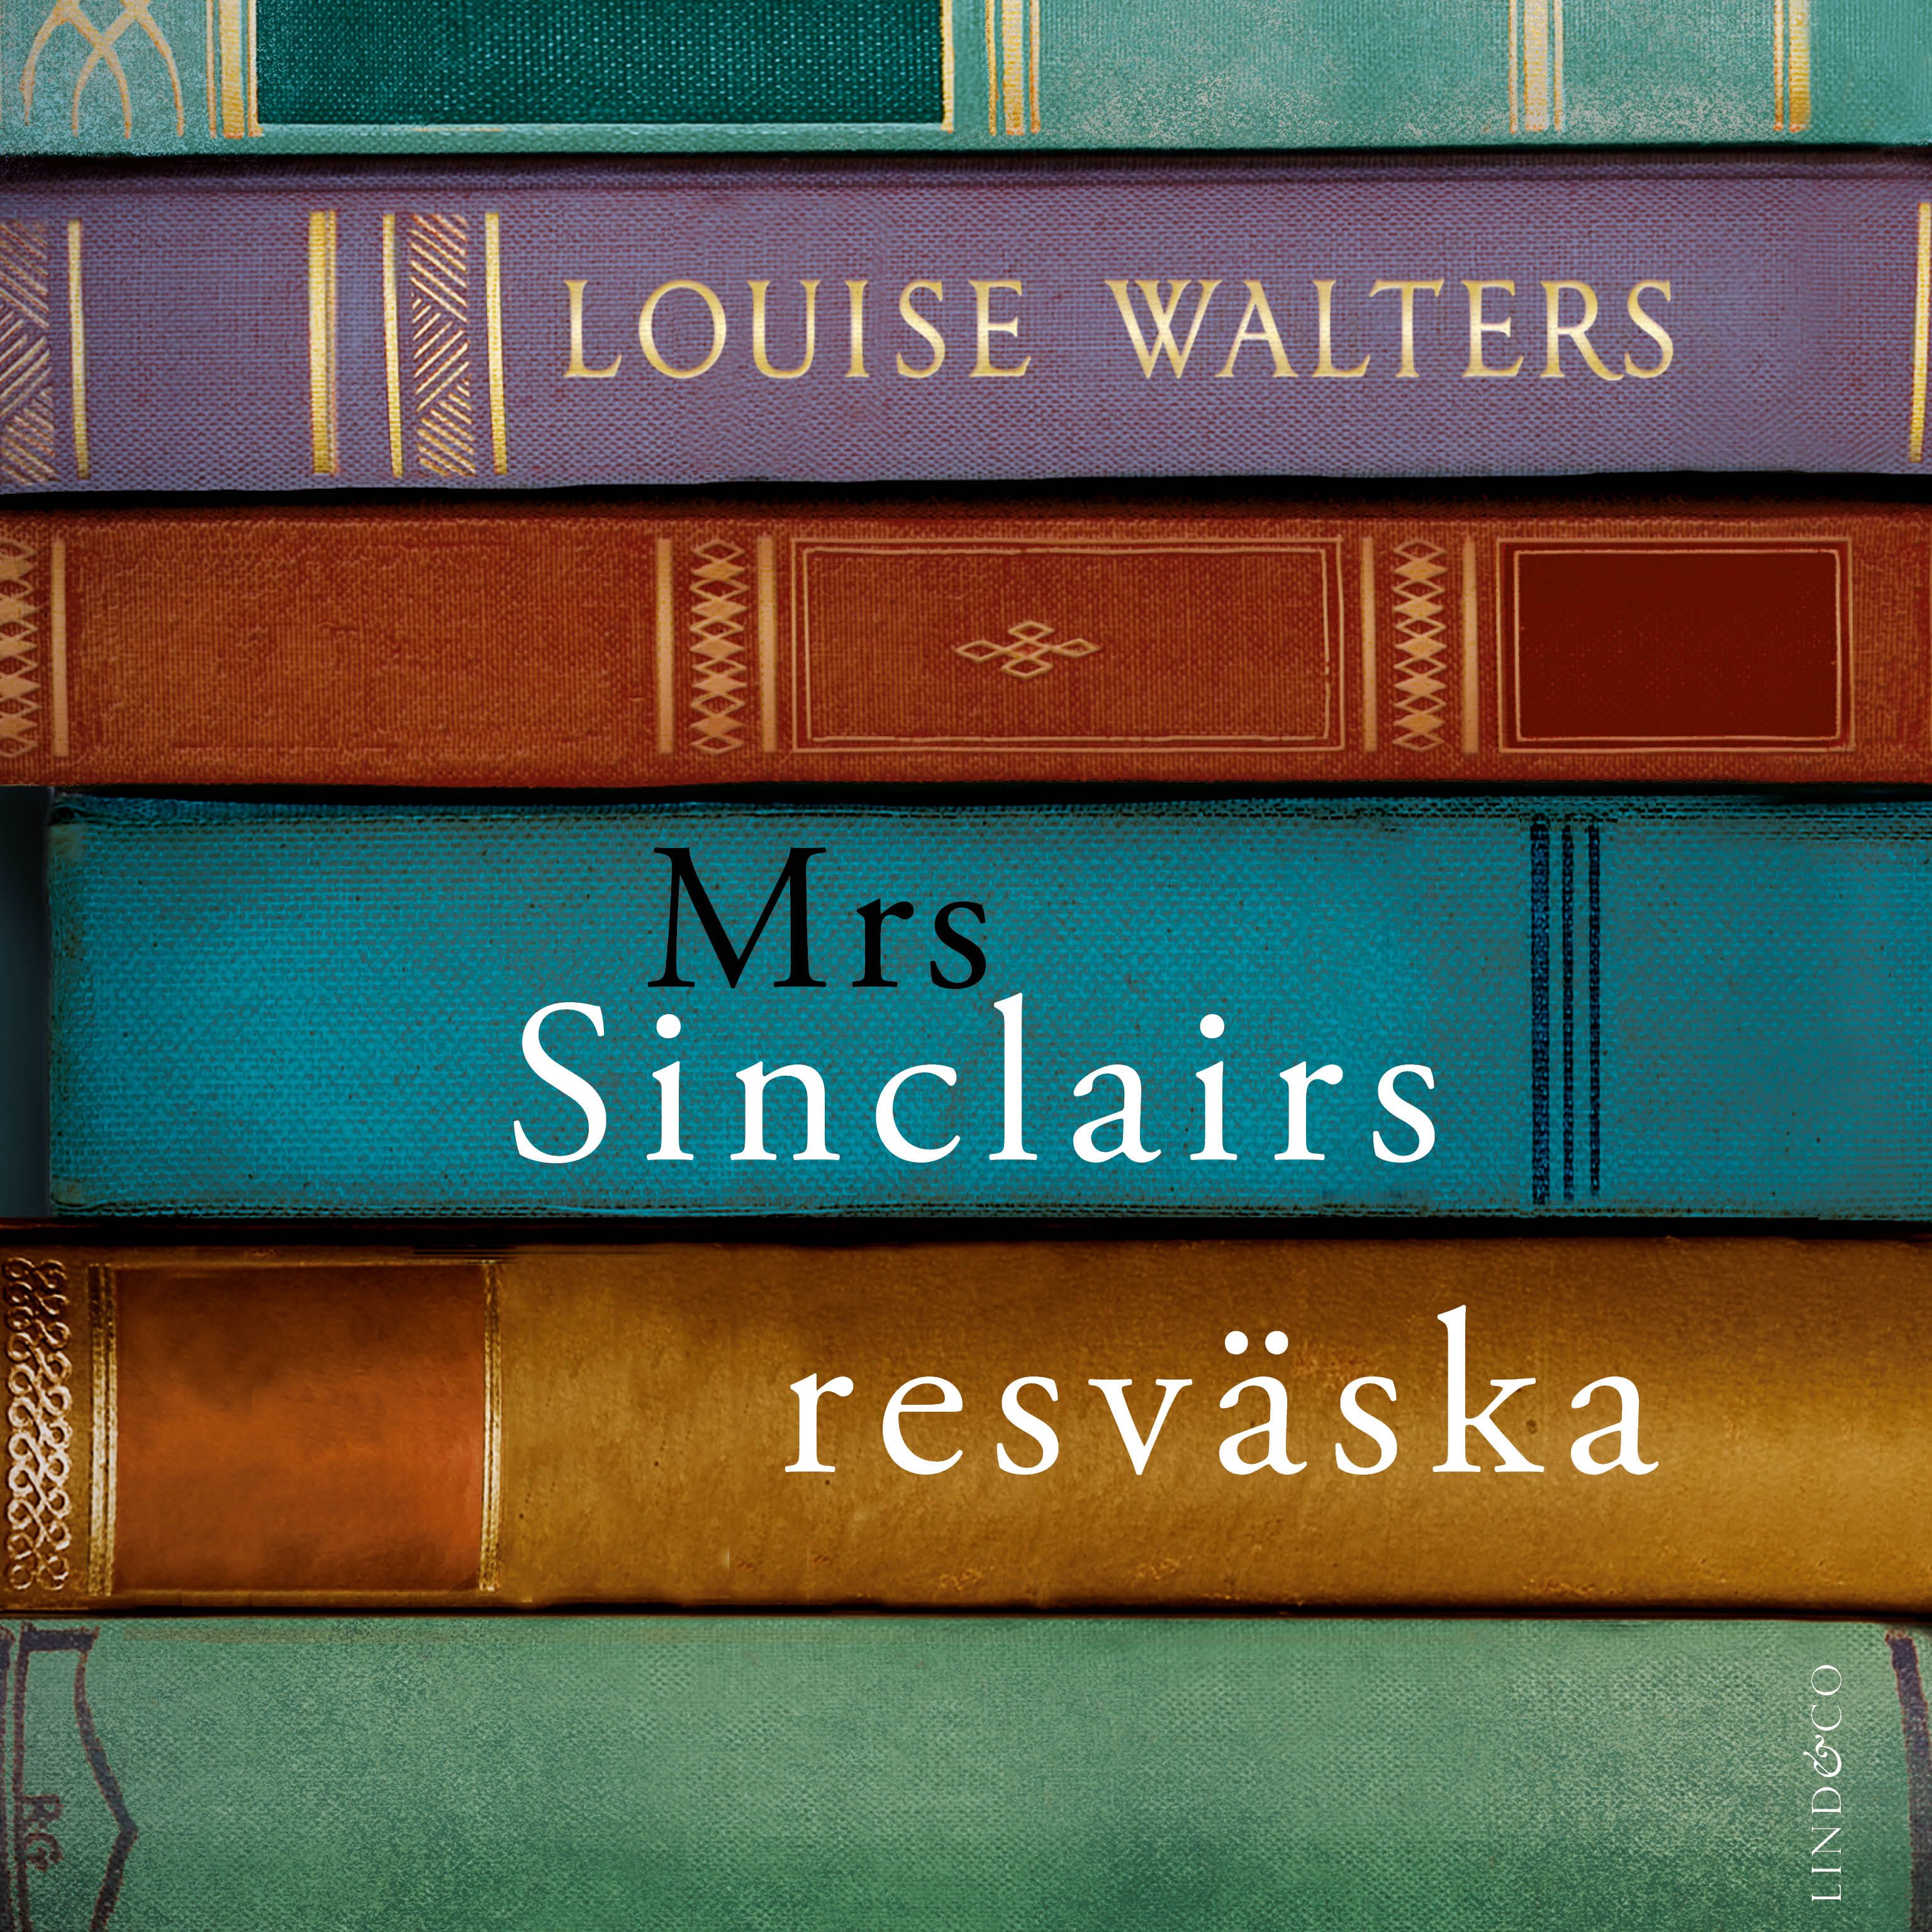 Mrs Sinclairs resväska, lydbog af Louise Walters